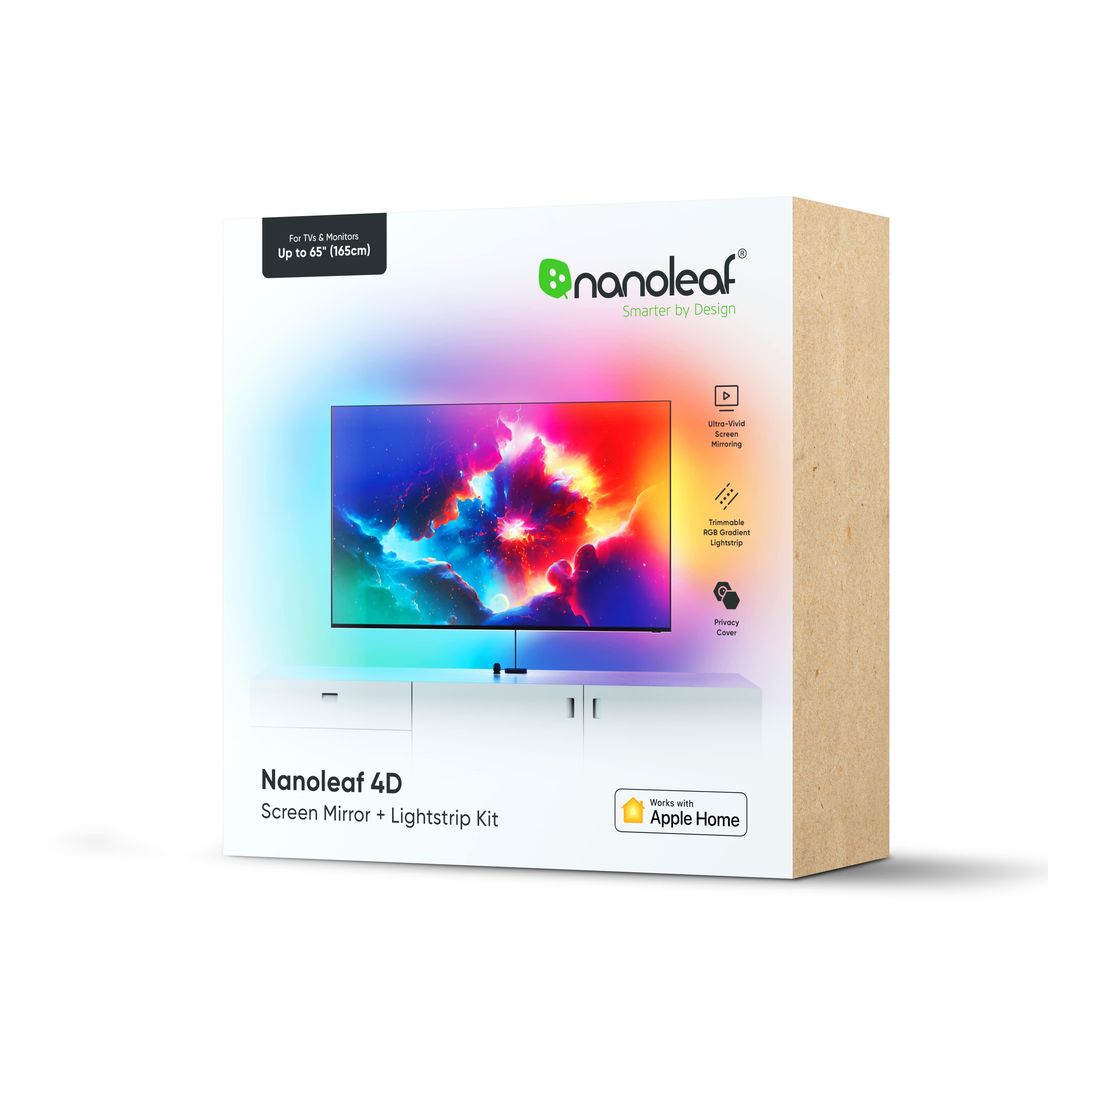 Nanoleaf 4D TV Screen Mirror + Lightstrip SMK For TVs up to 65